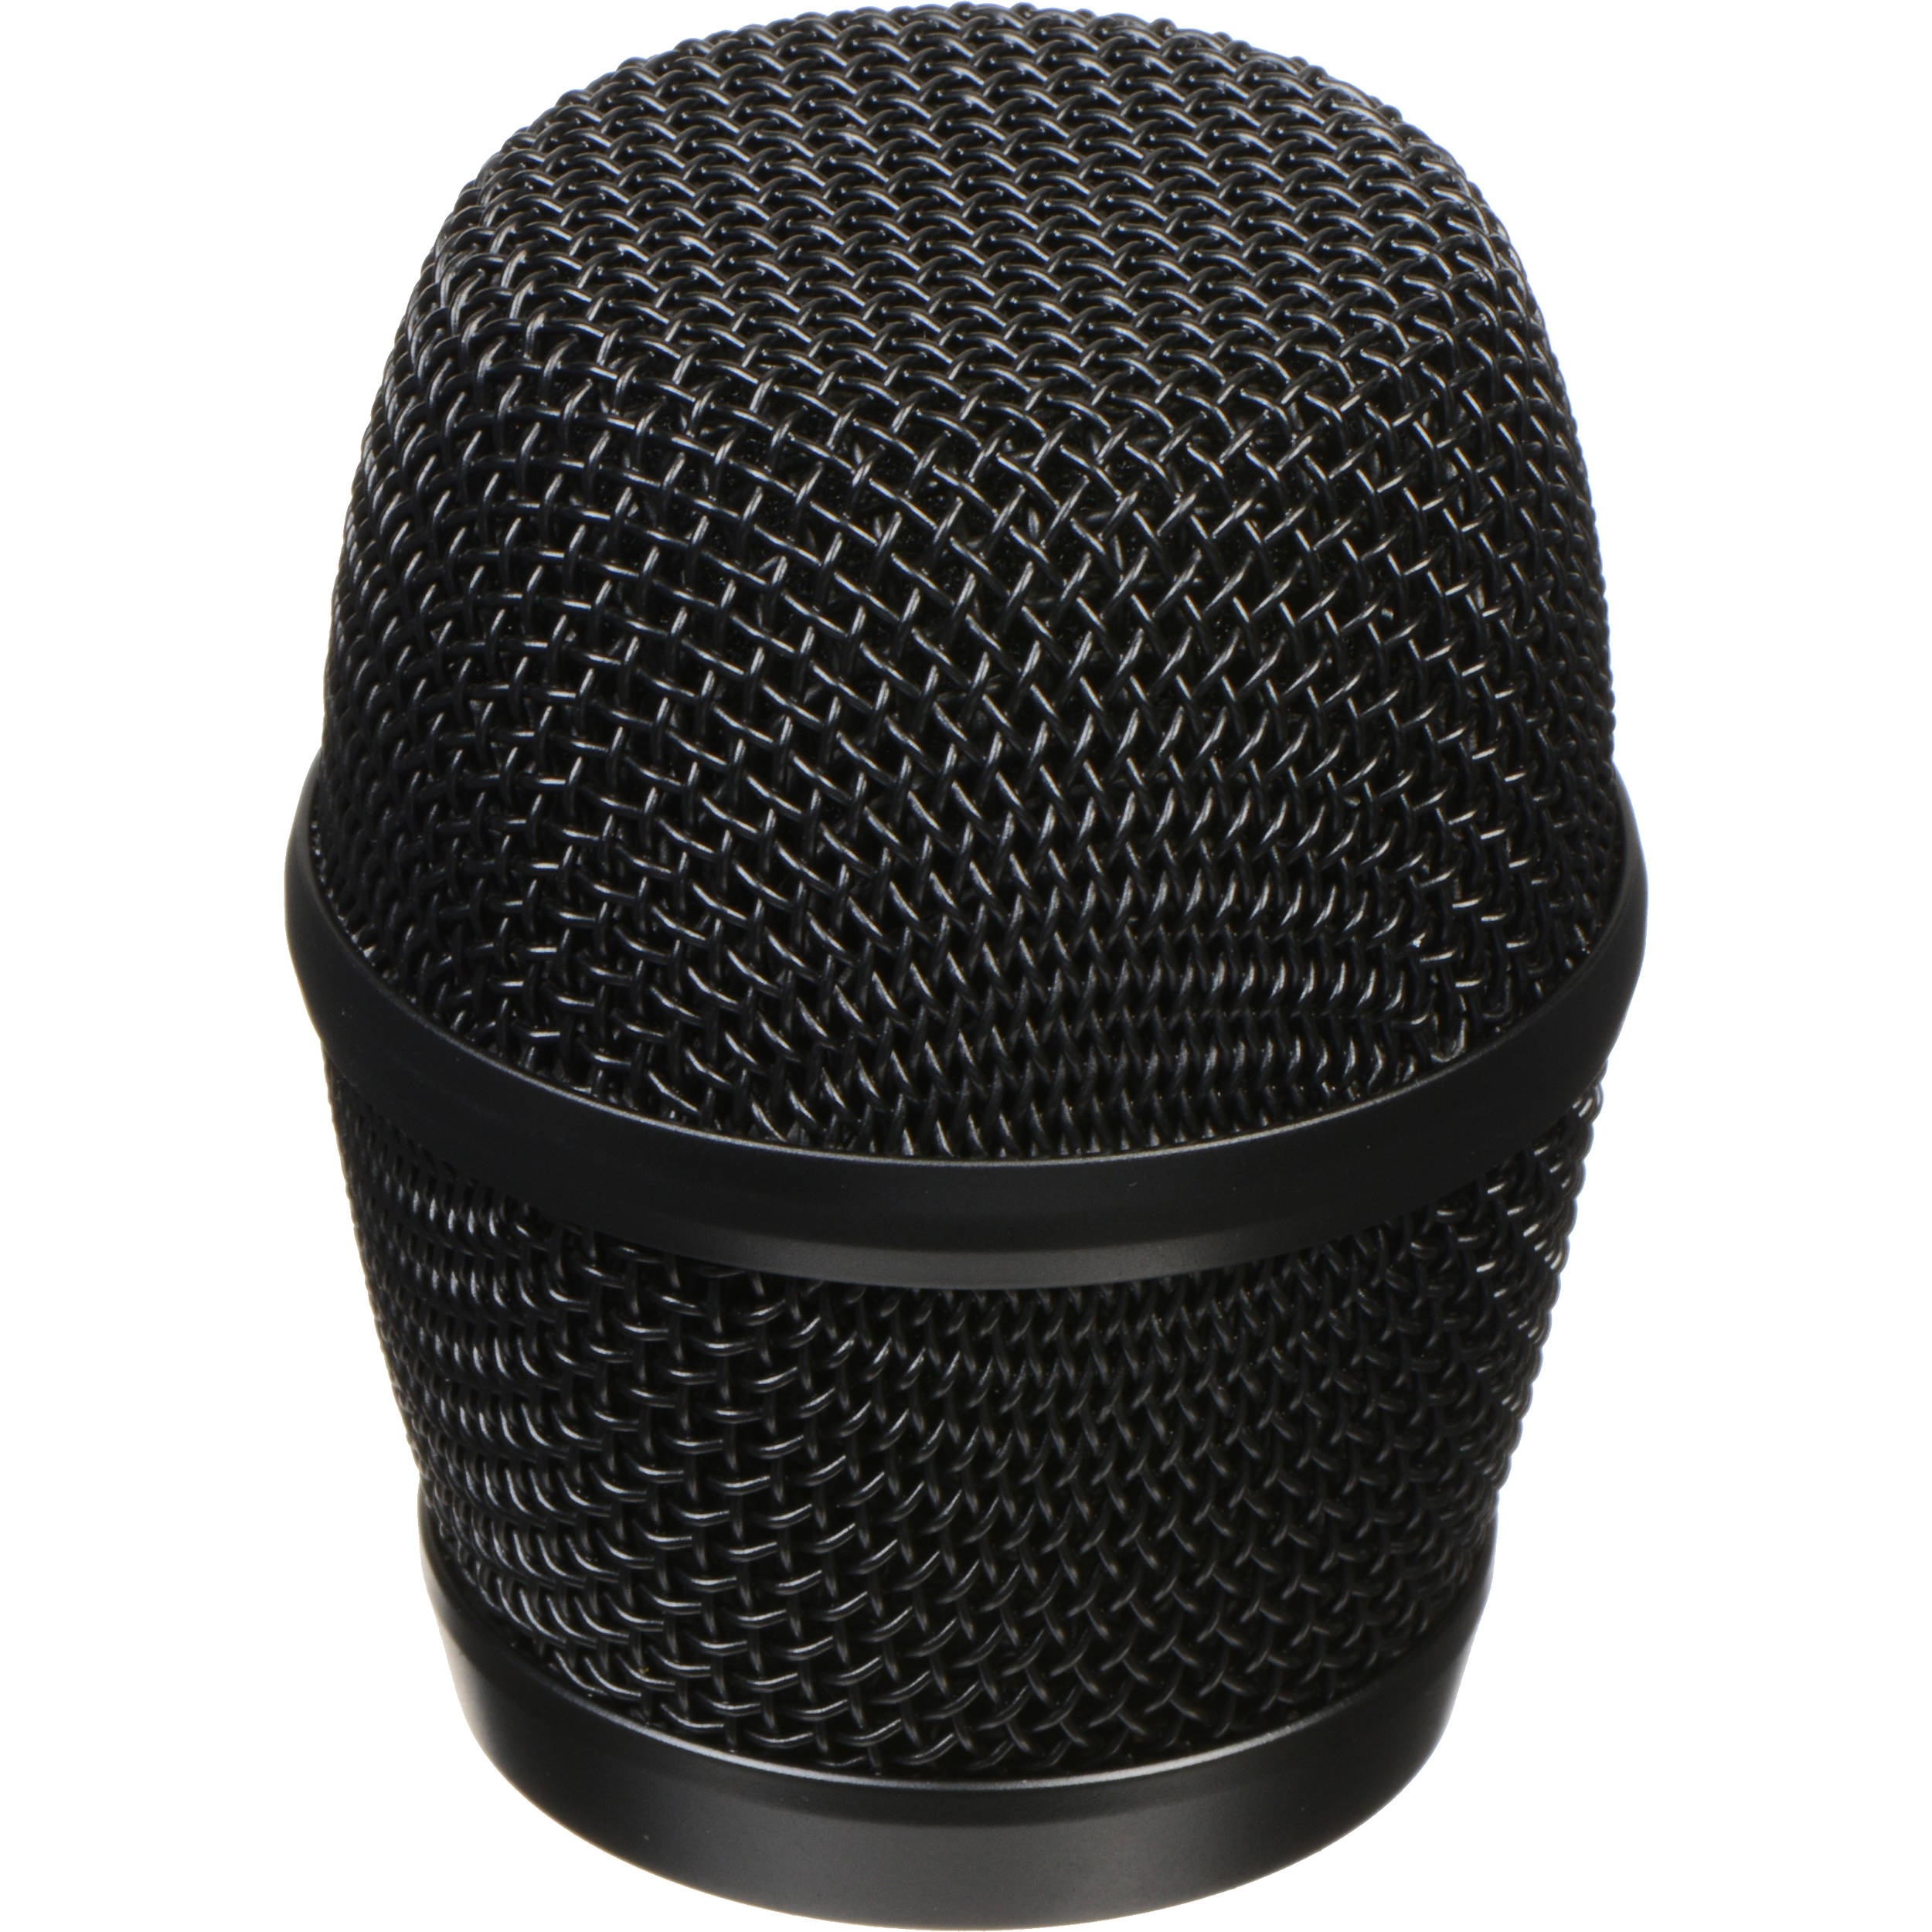 Shure RPM264 Factory Original KSM9 Microphone Replacement Grille (Black)